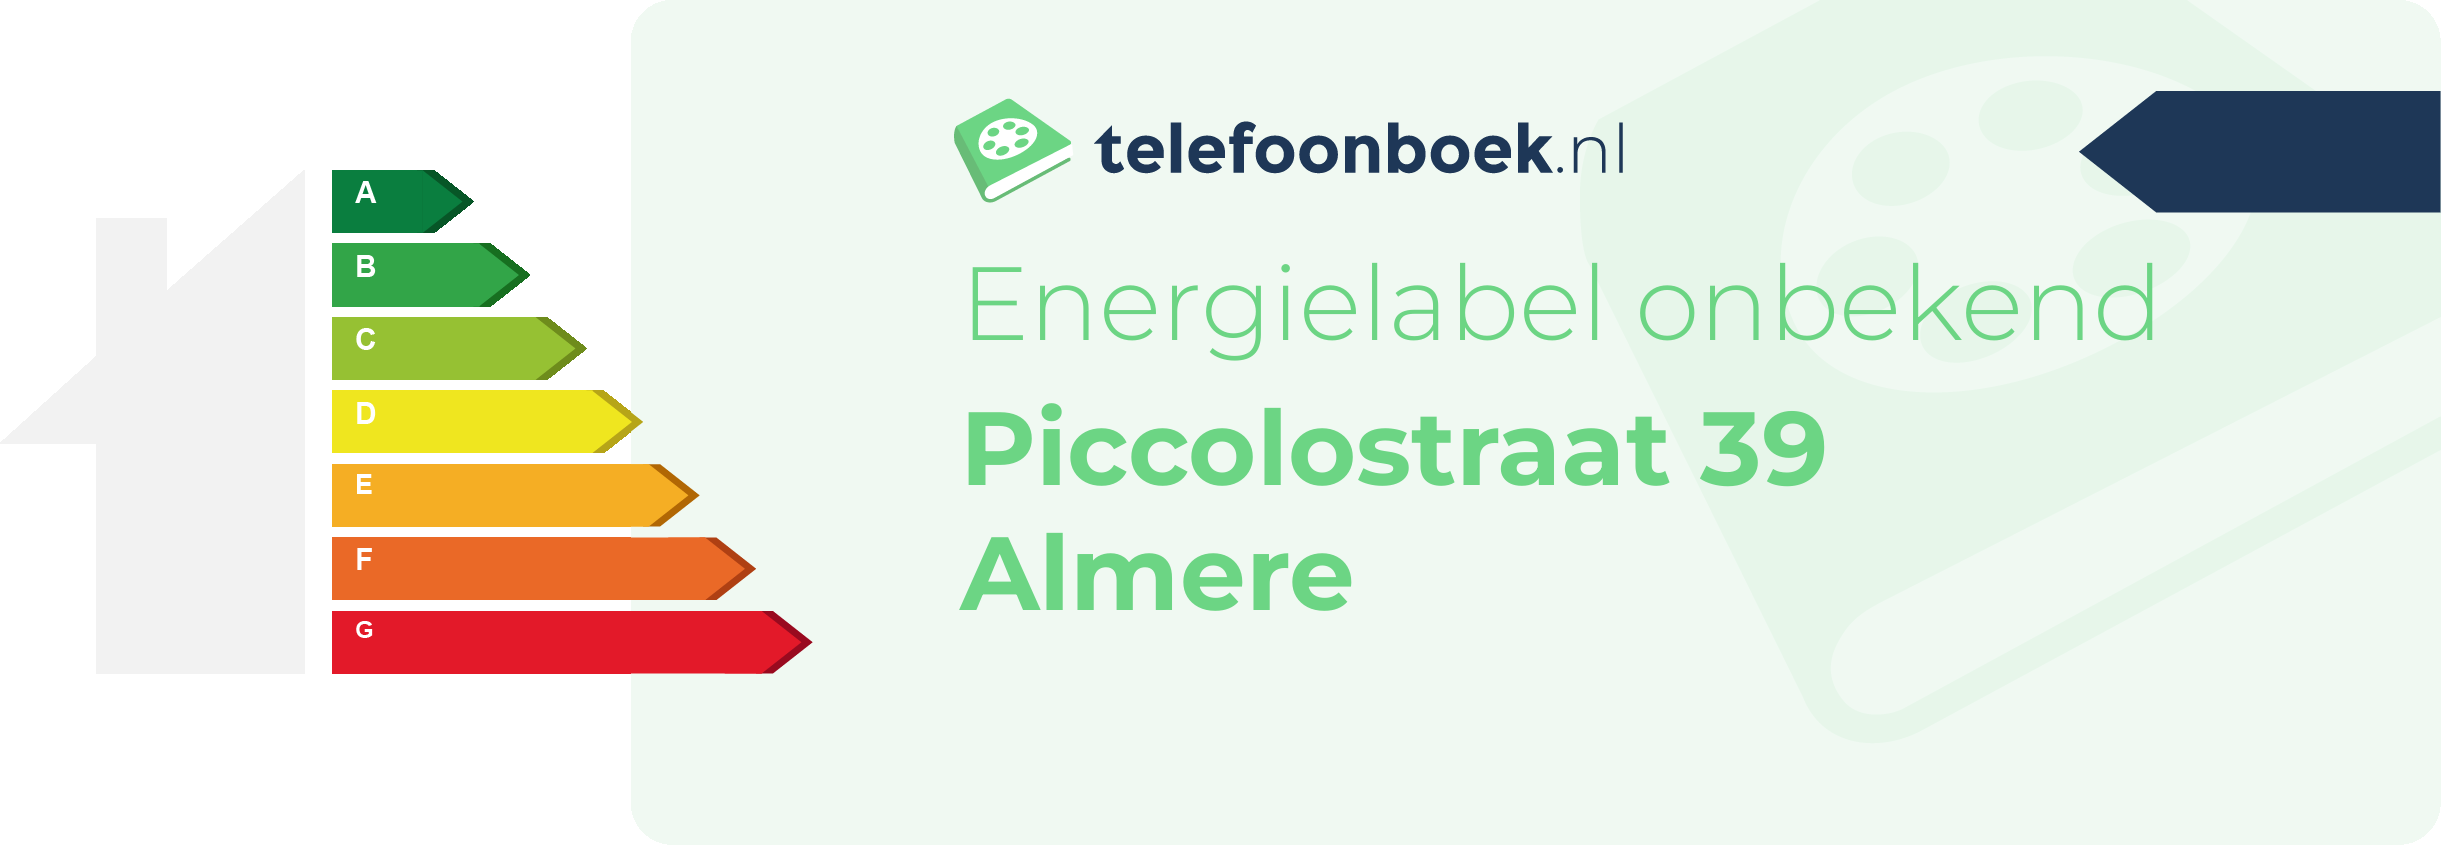 Energielabel Piccolostraat 39 Almere